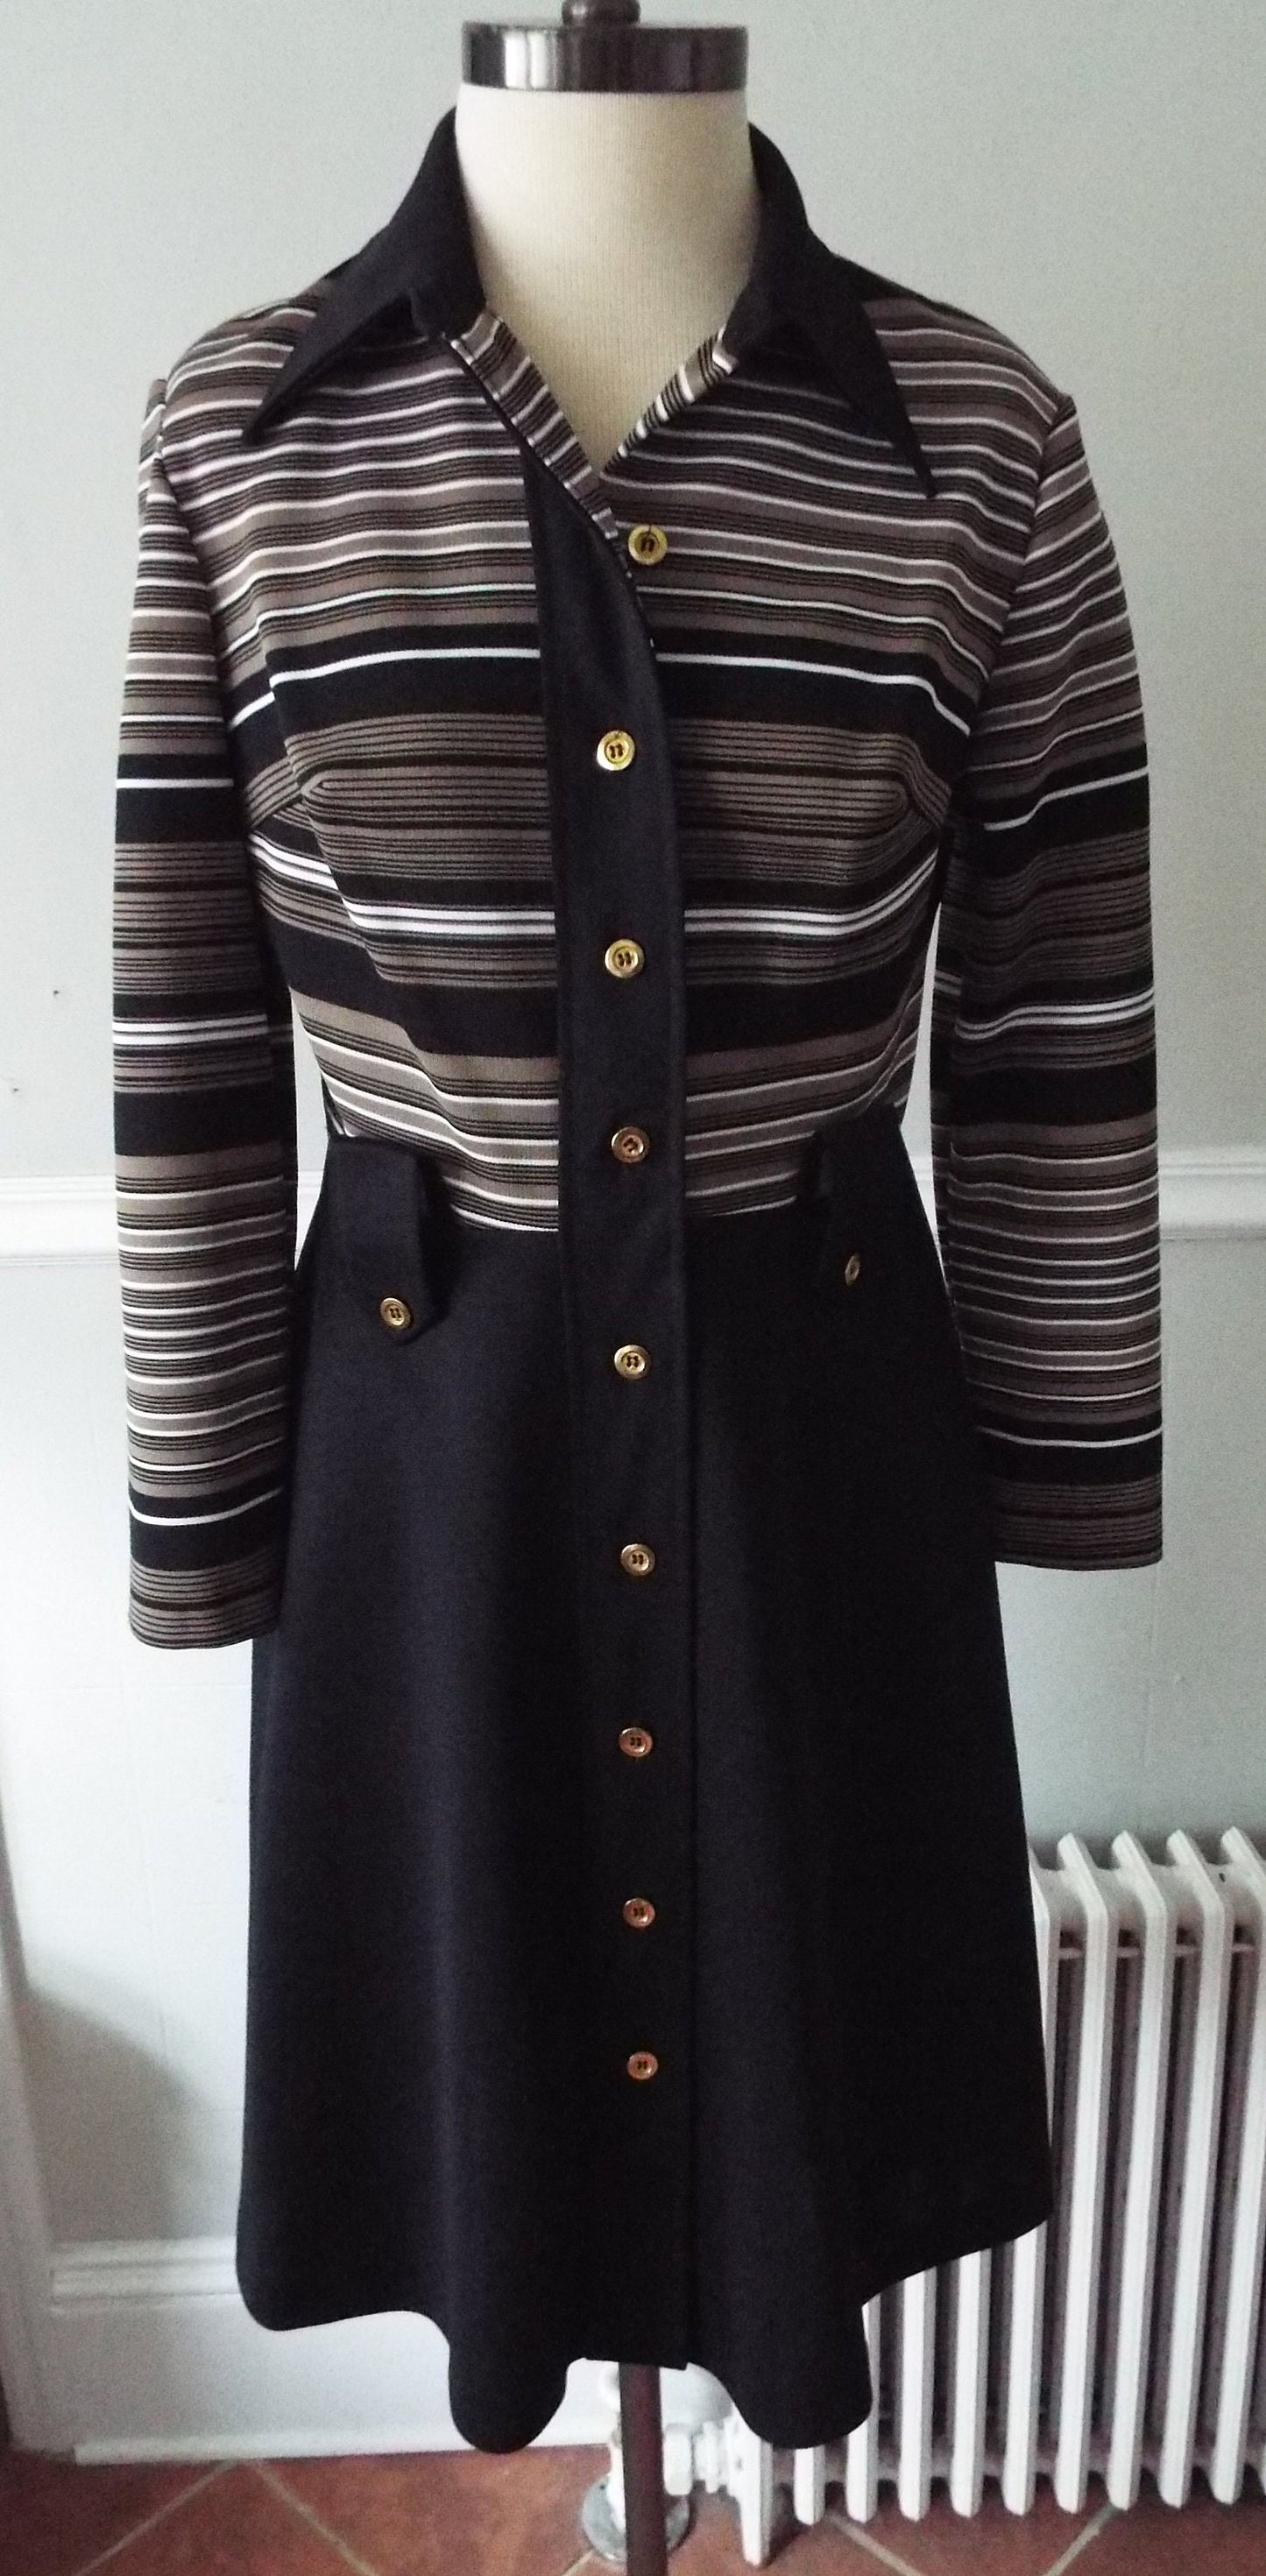 Vintage Long Sleeve Striped Dress by Kay Windsor